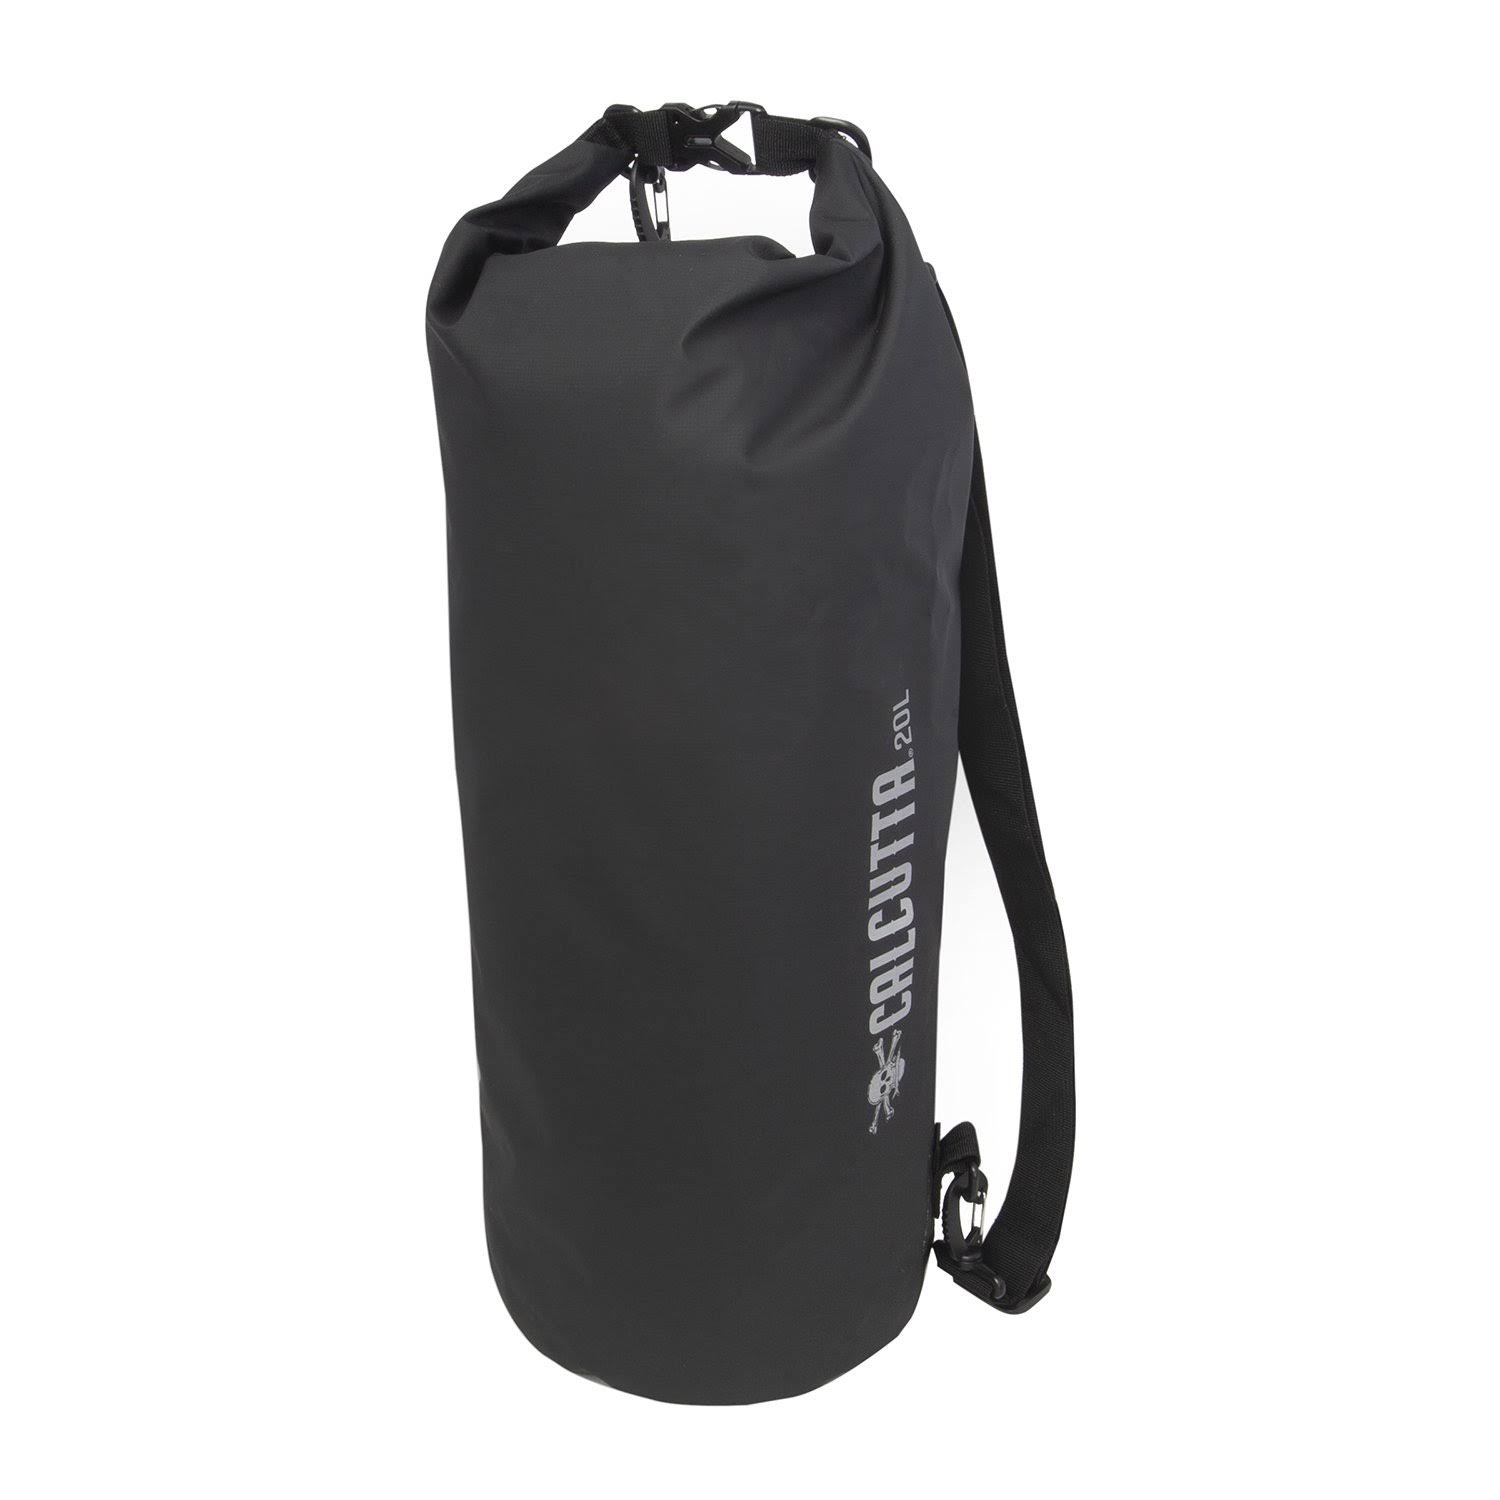 Calcutta Waterproof Dry Bag - 20 LITER